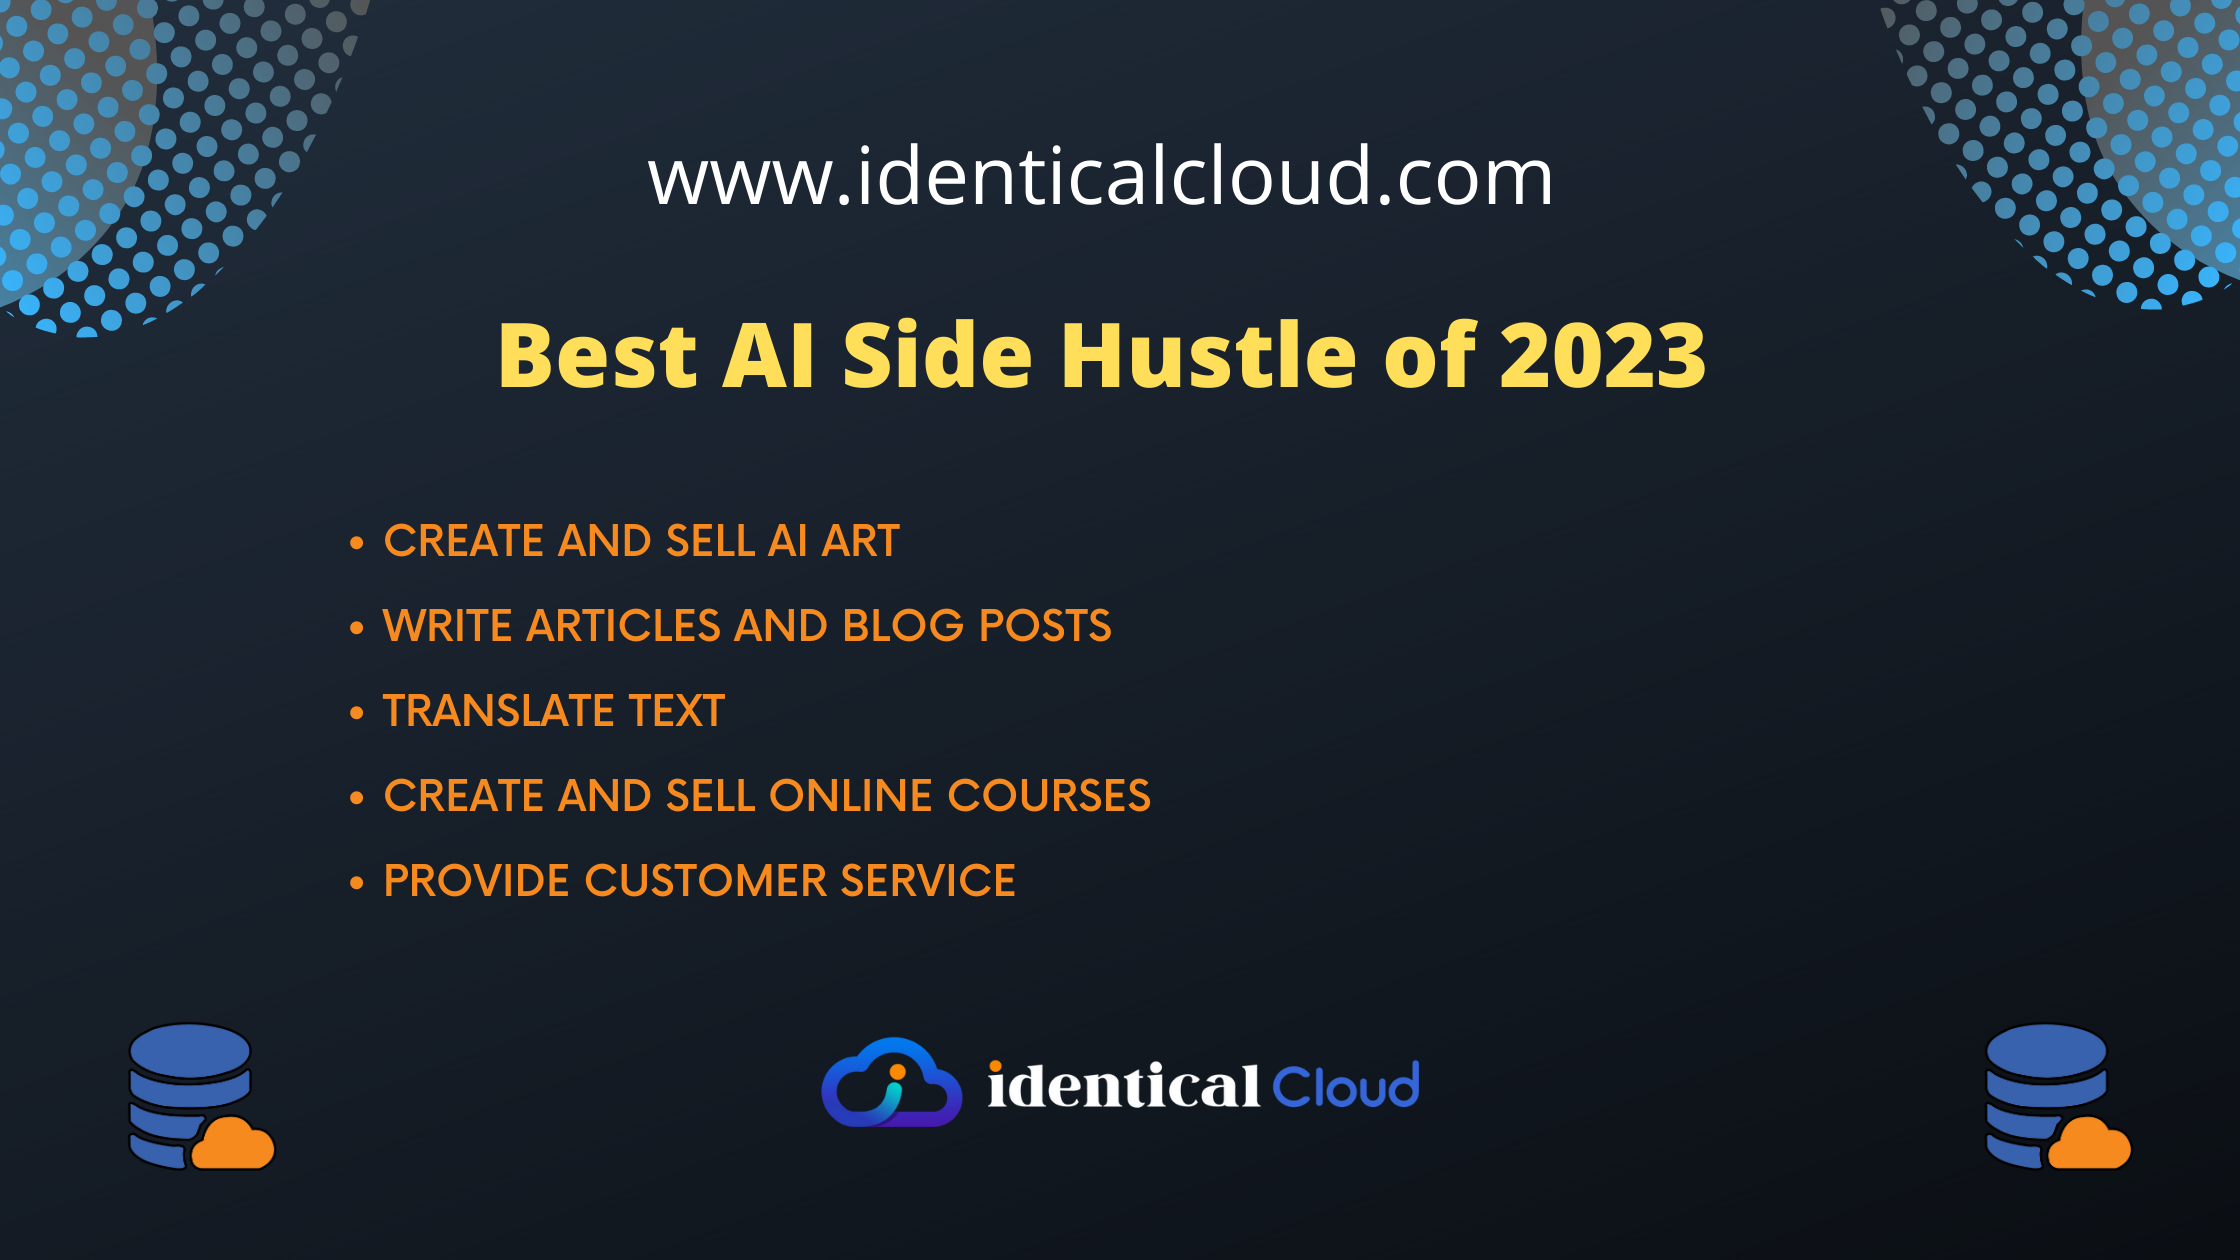 Best AI Side Hustle of 2023 - identicalcloud.com